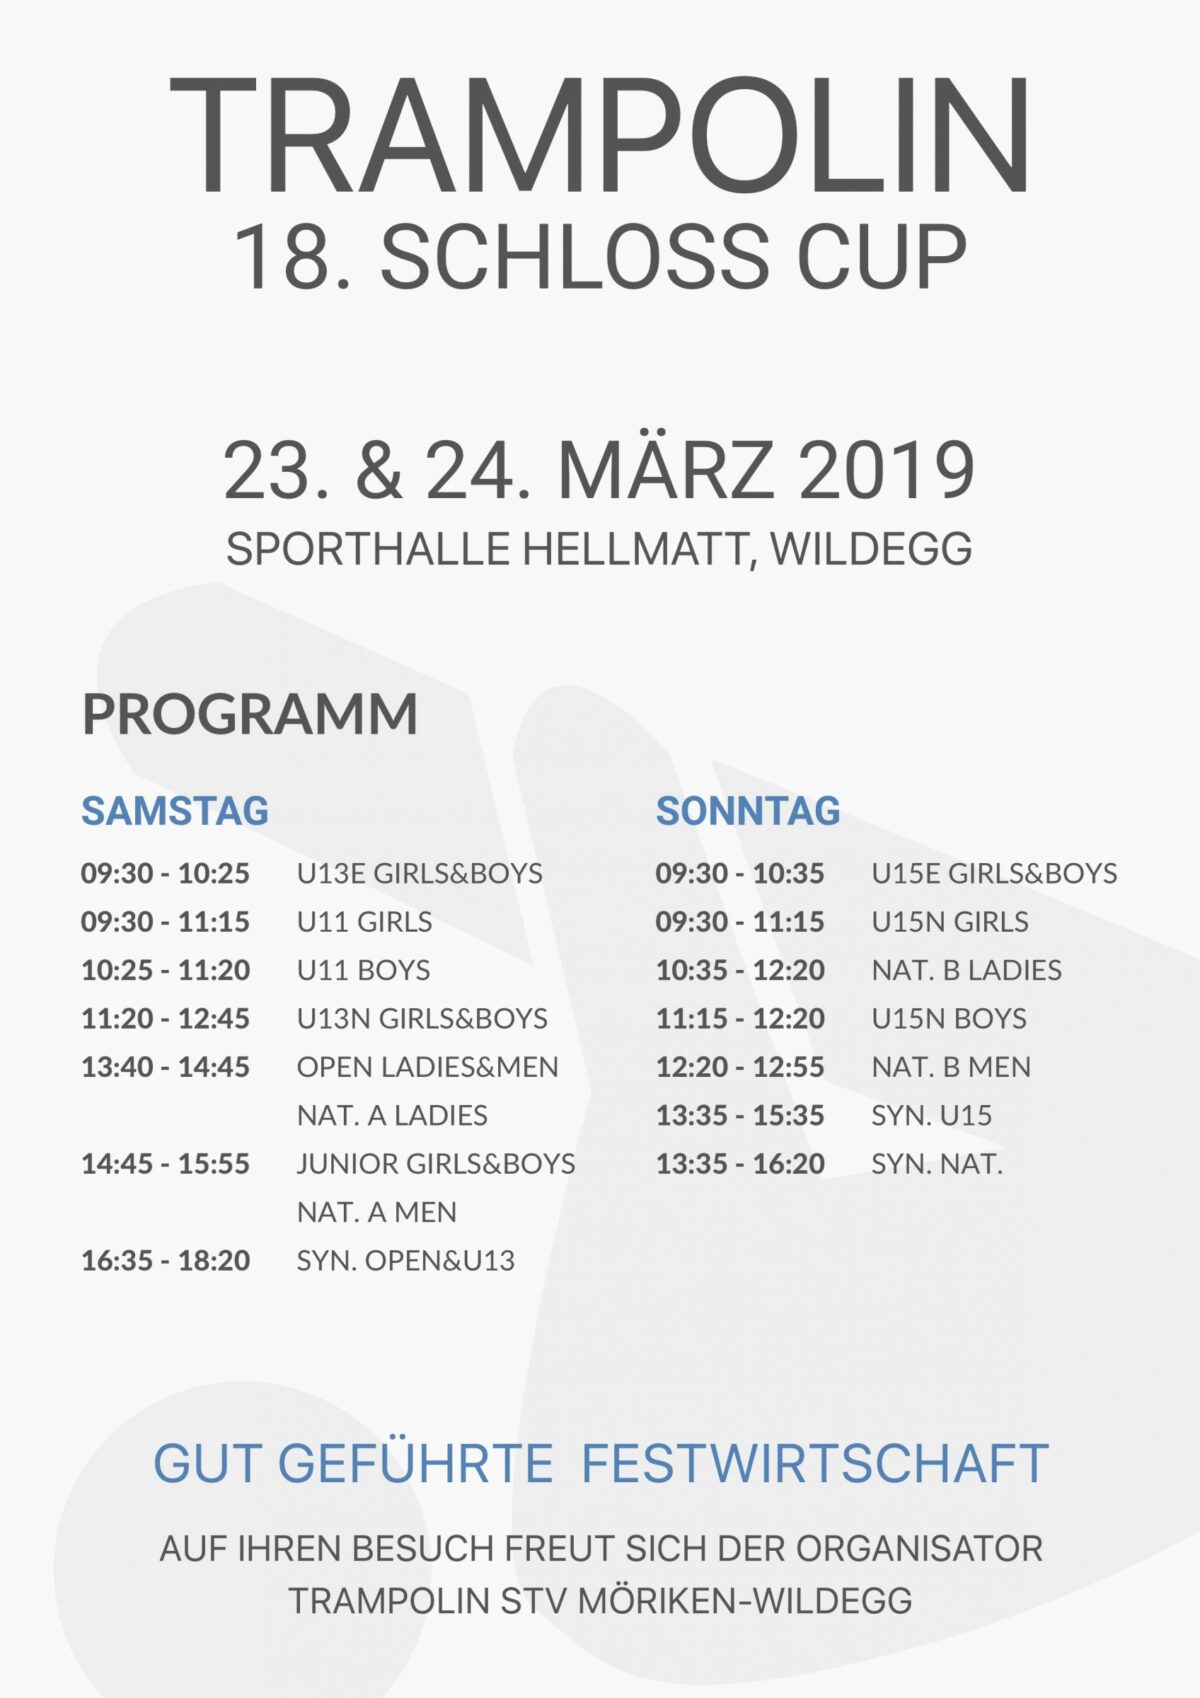 Trampolin Schloss Cup 2019 in Wildegg